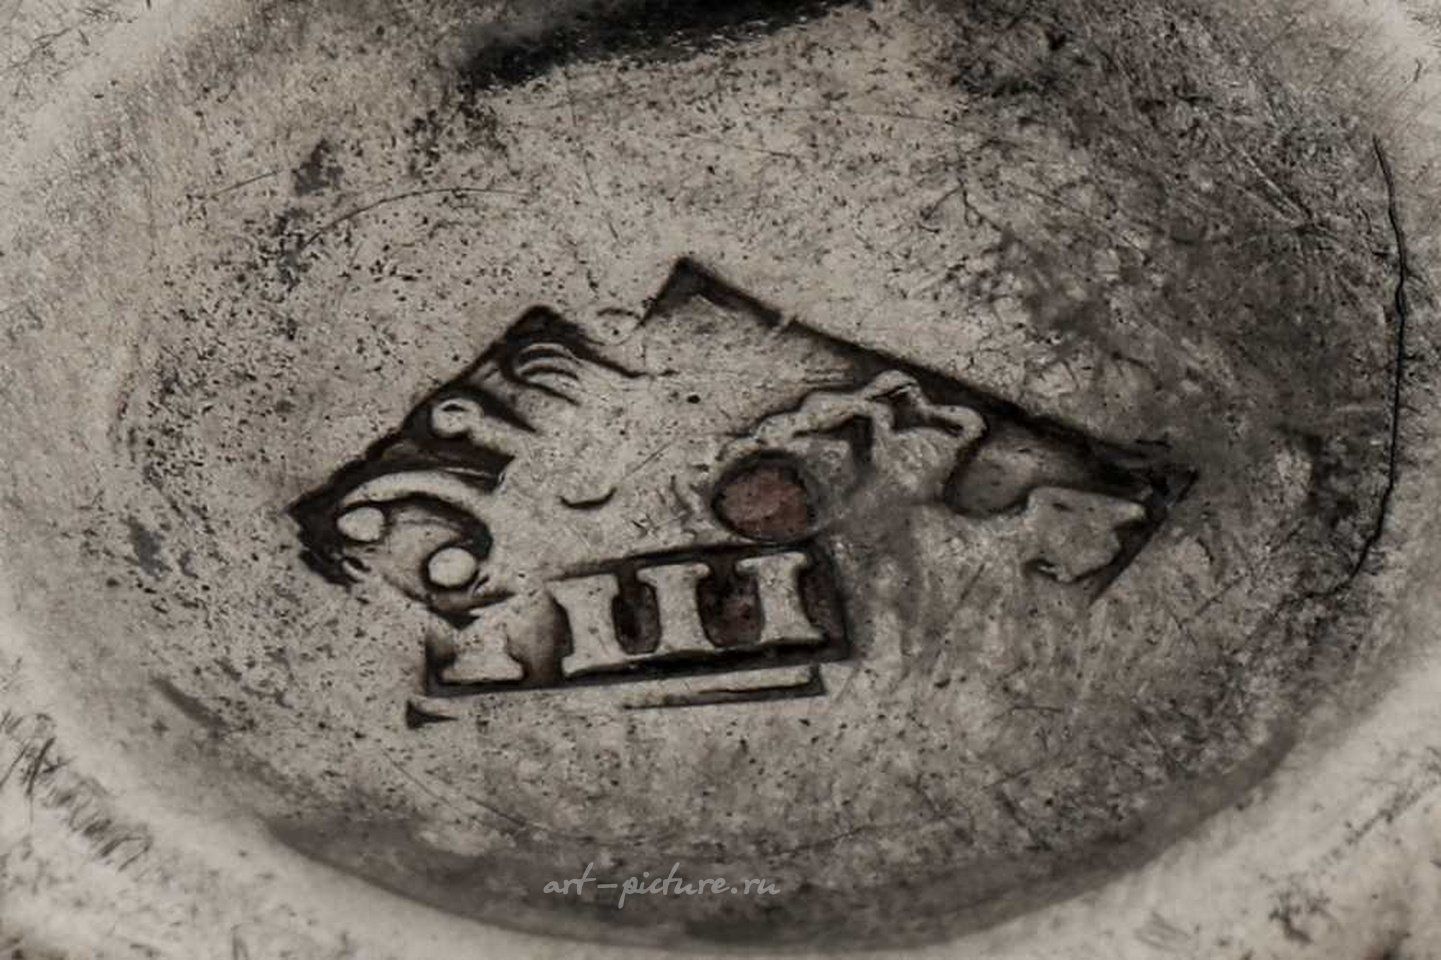 Русское серебро , Русская серебряная водочная чарка (чарка) раннего 18 века Петра I